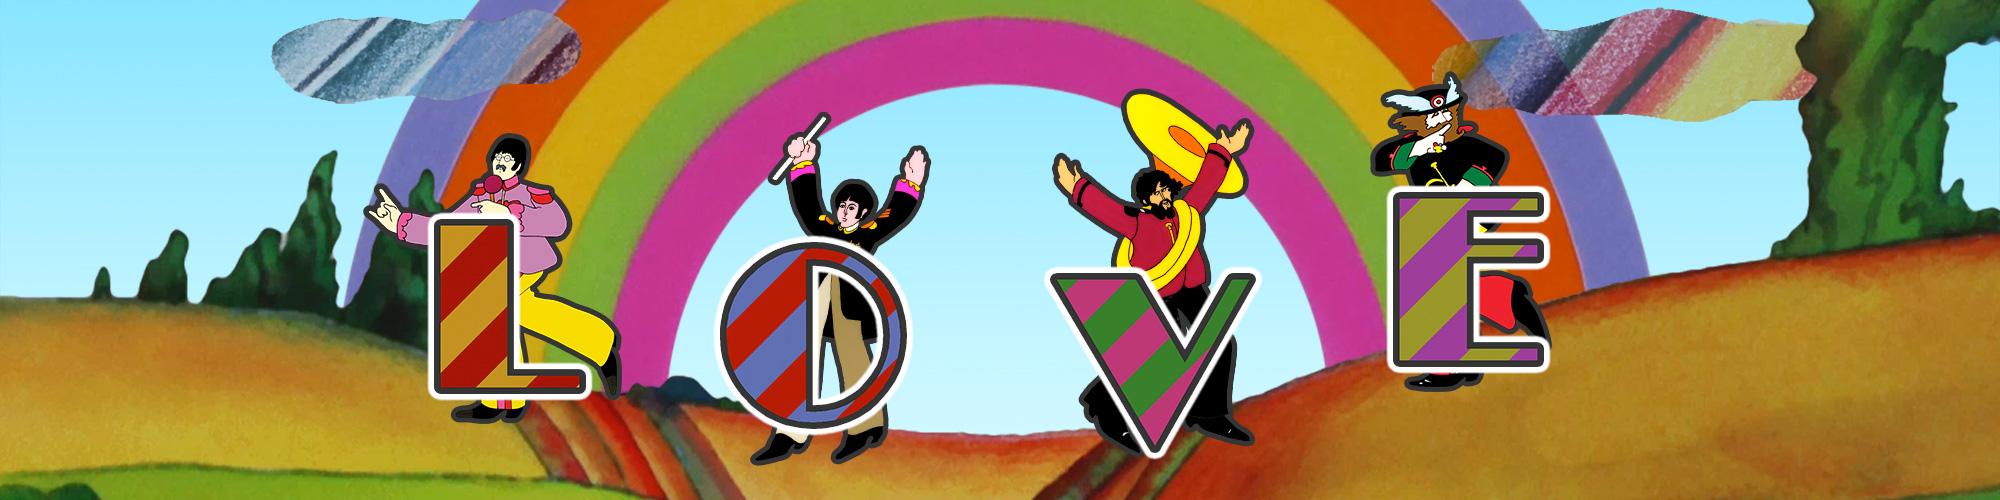 The Beatles iPad game